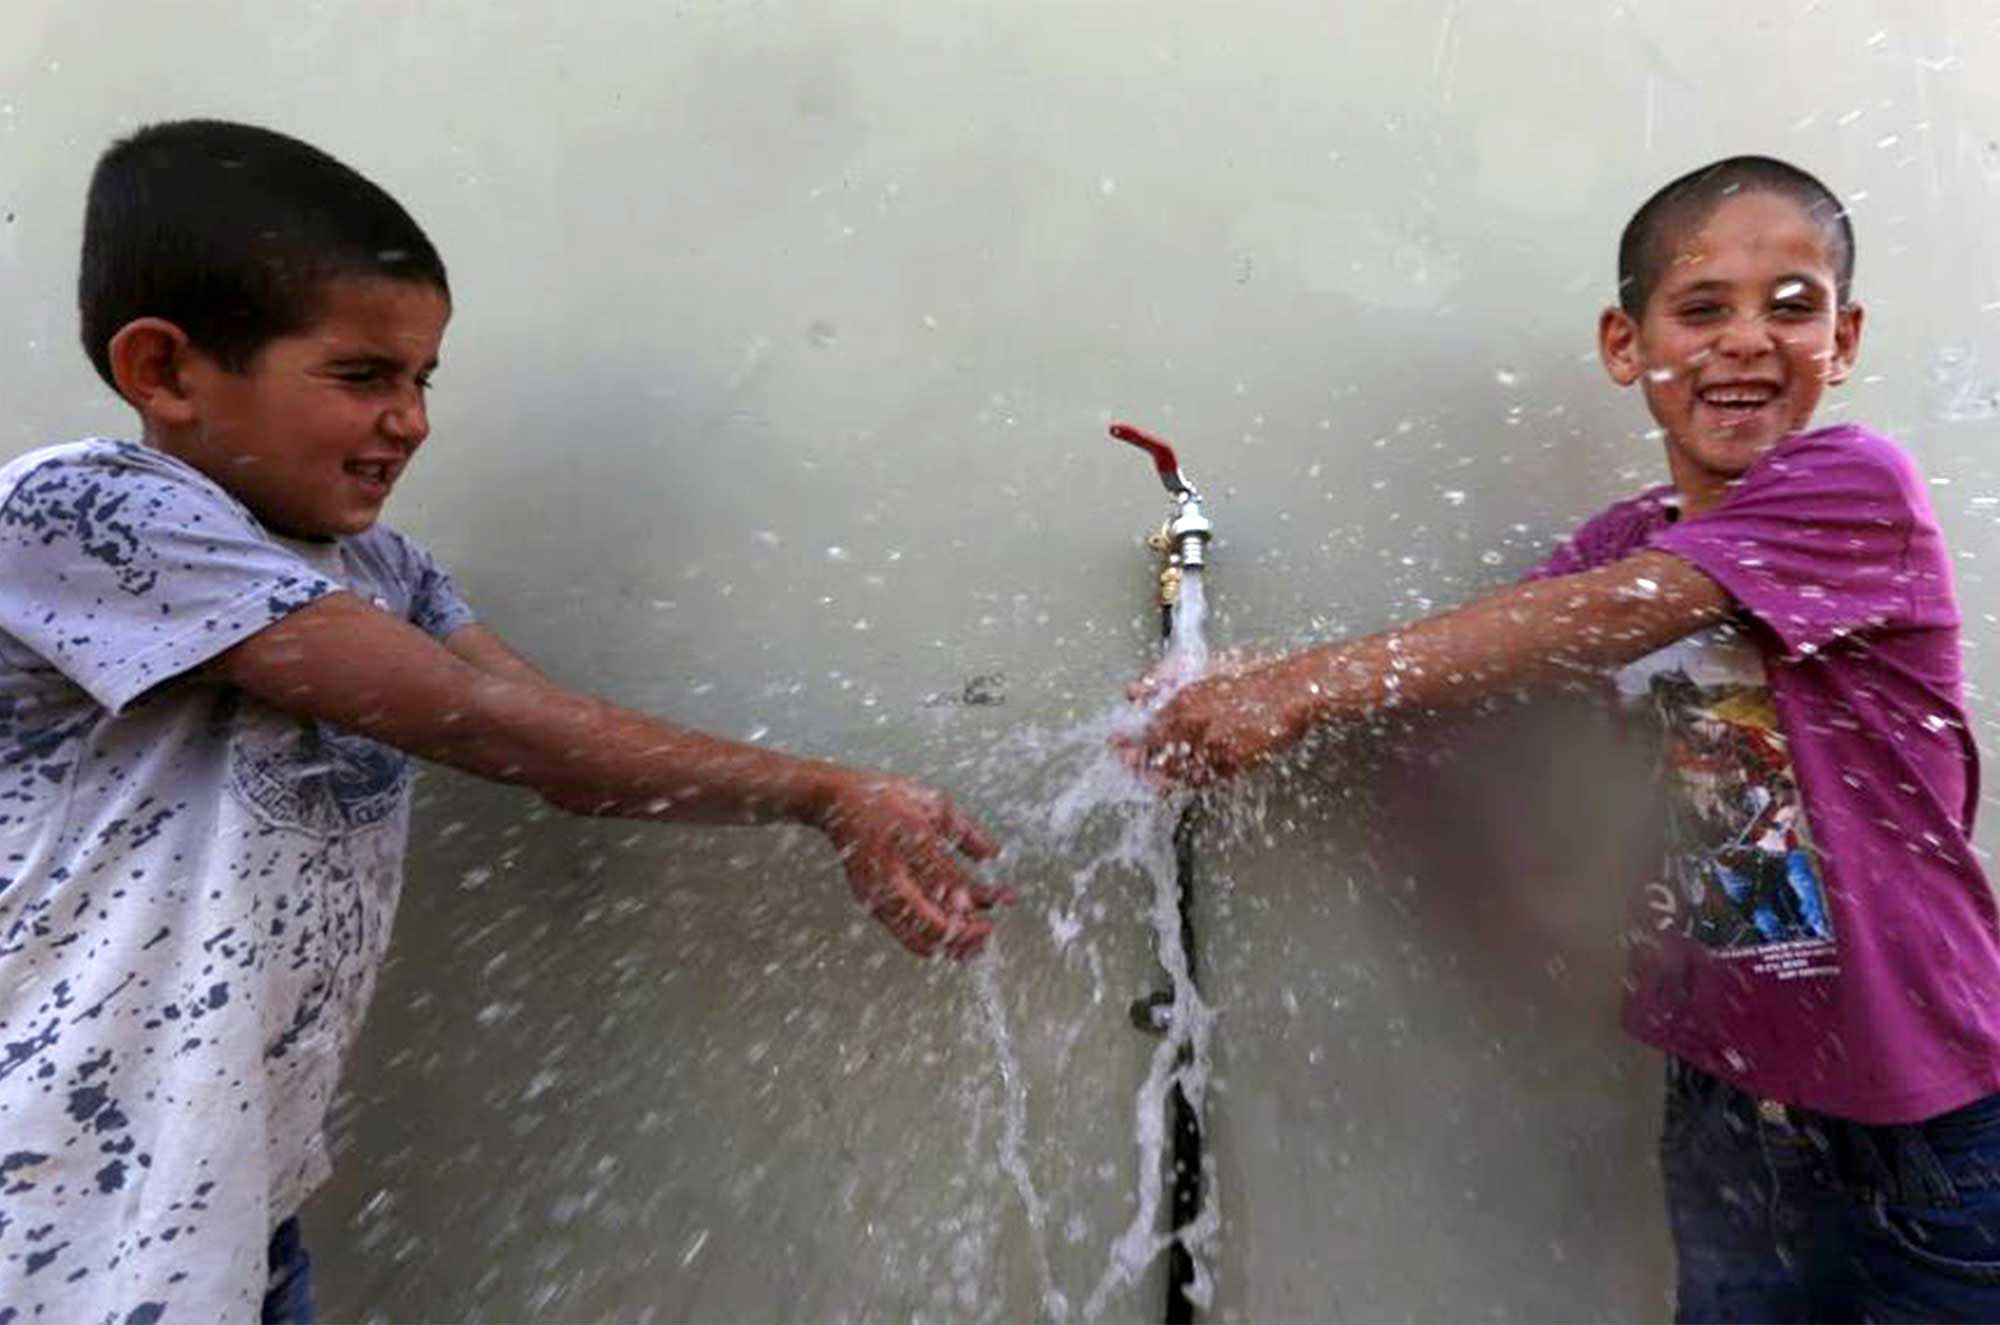 Palestine water crisis